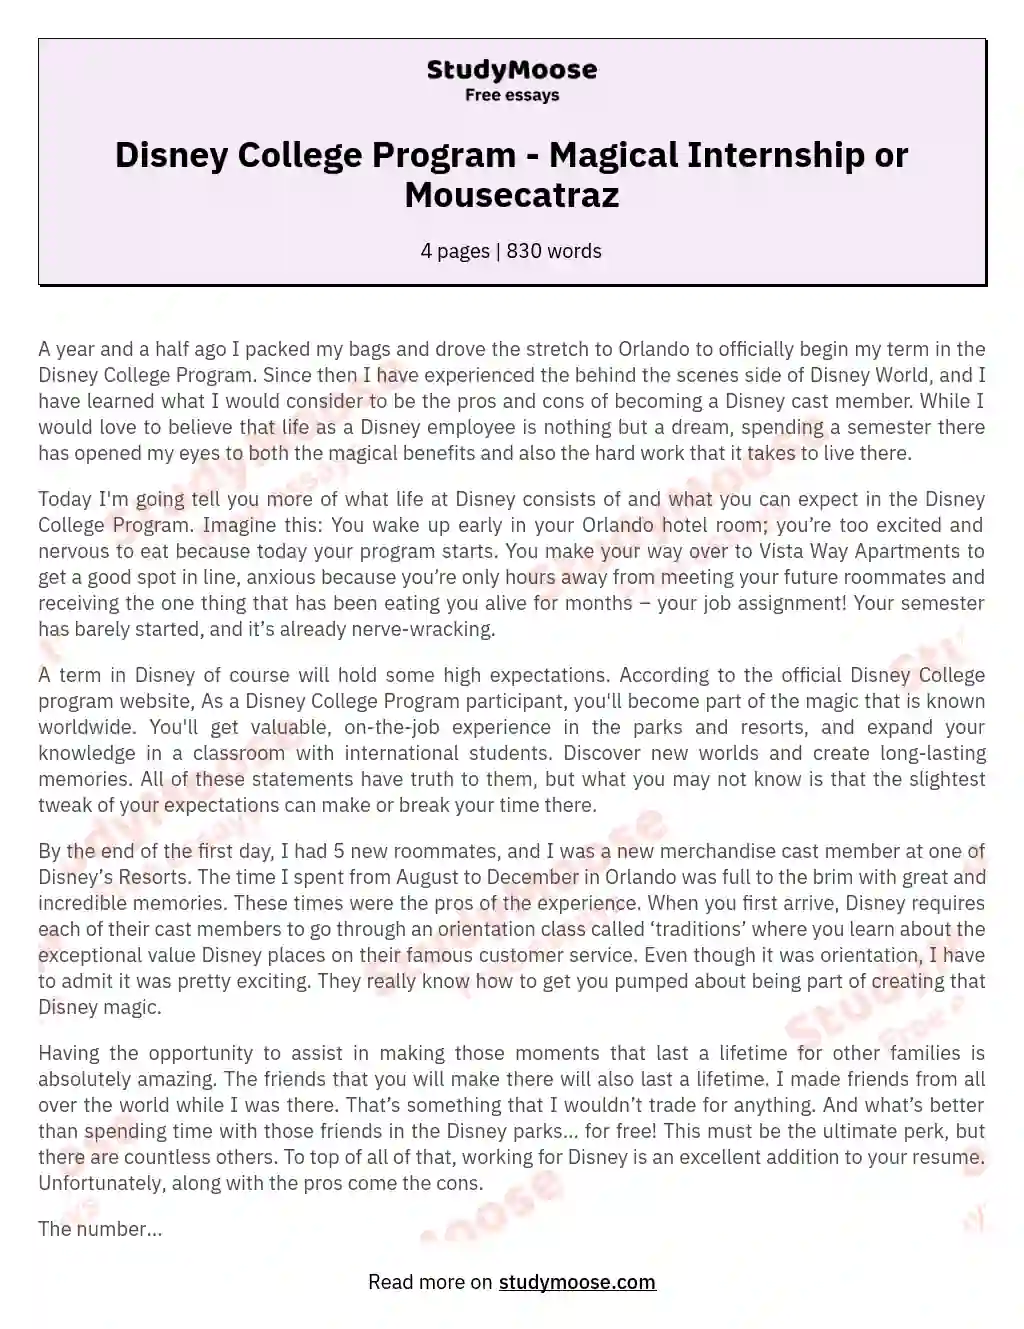 Disney College Program - Magical Internship or Mousecatraz essay